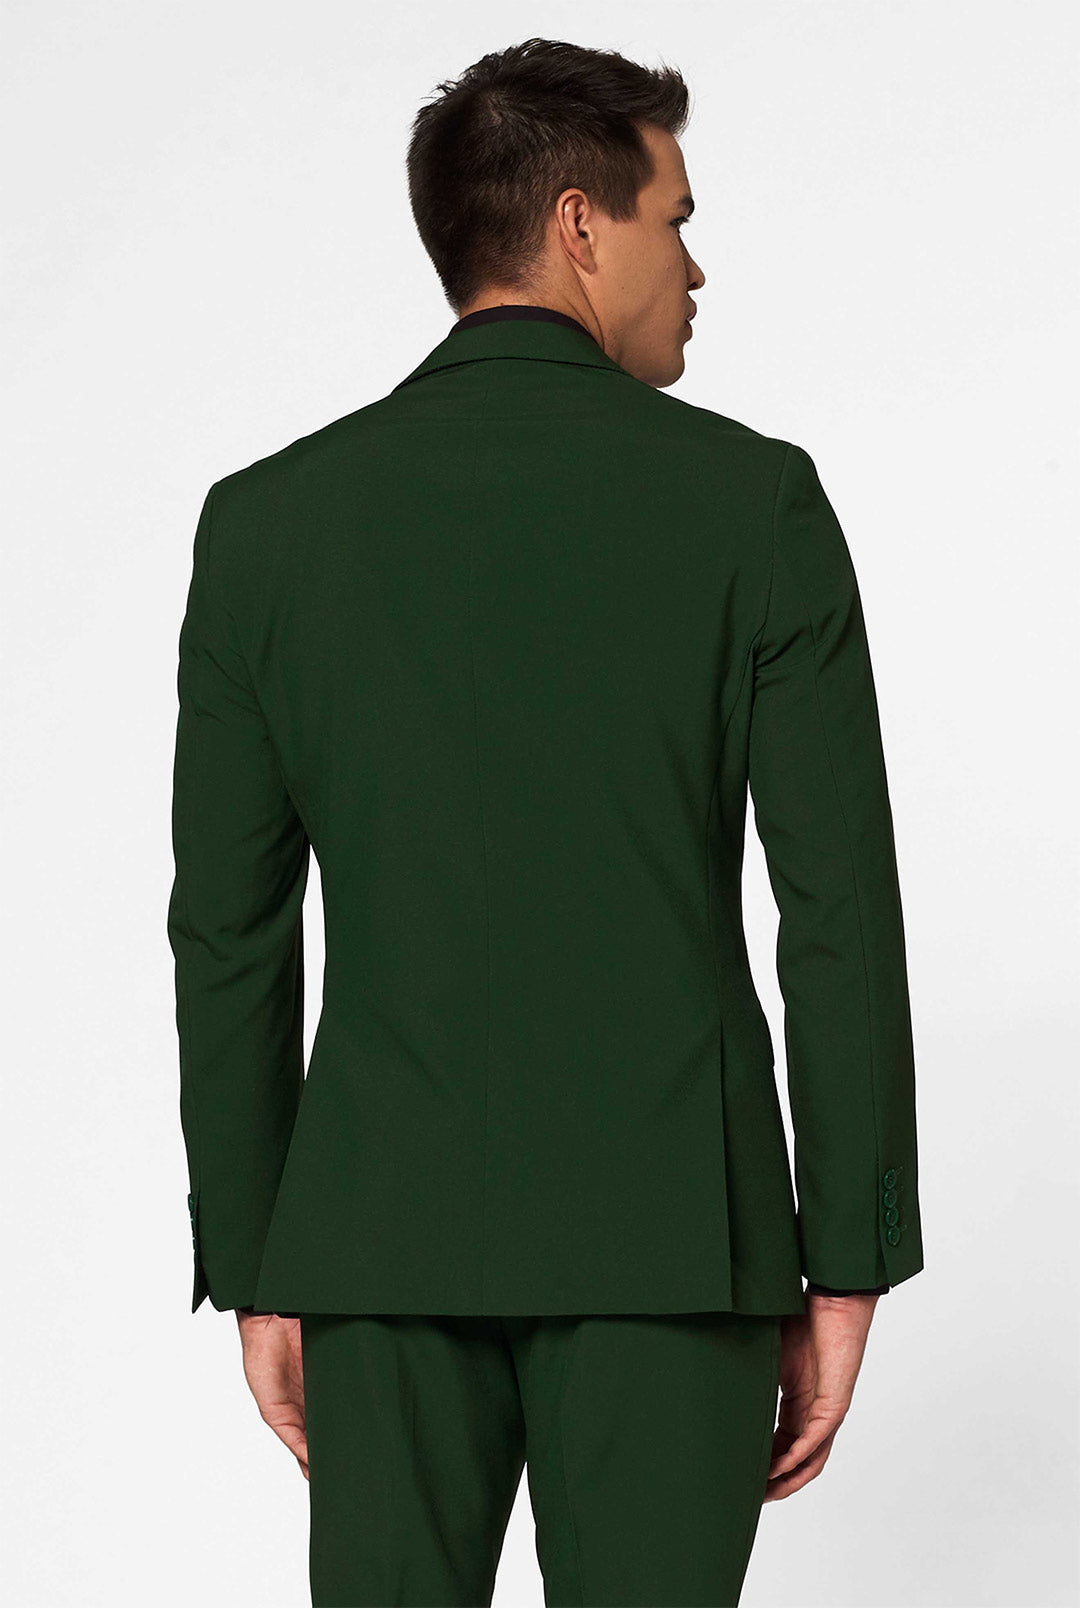 GREEN FORMAL SUIT Elegant Fashion Suit Green Two Piece Wedding Wear Gift  Formal Fashion Suit Men Green Suit - Etsy